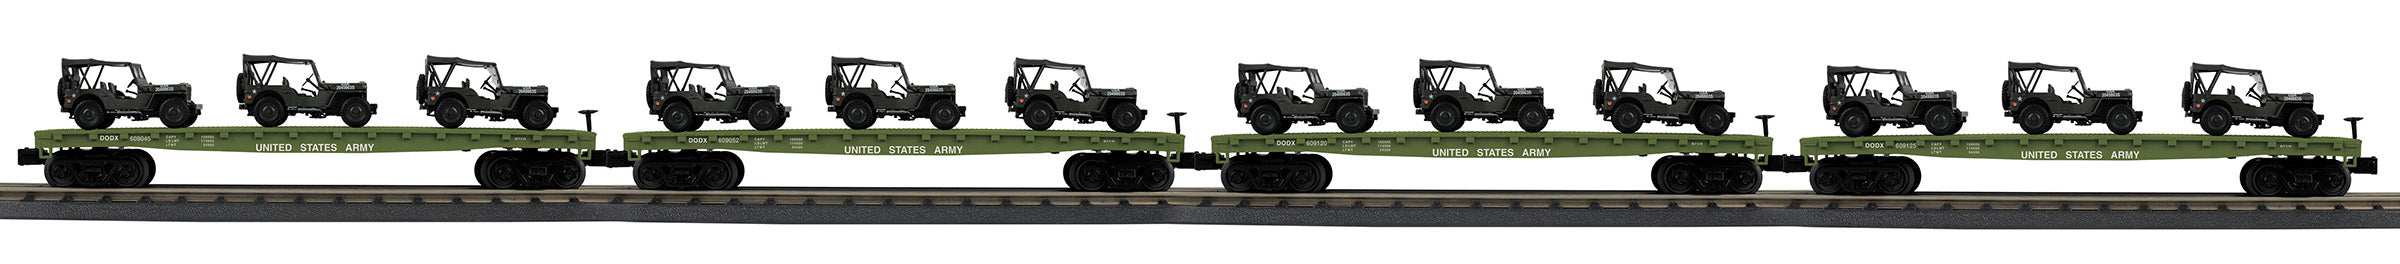 MTH 30-70123 - Flat Car "U.S. Army" w/(3) Willy’s Transport Vehicles (4-Car)